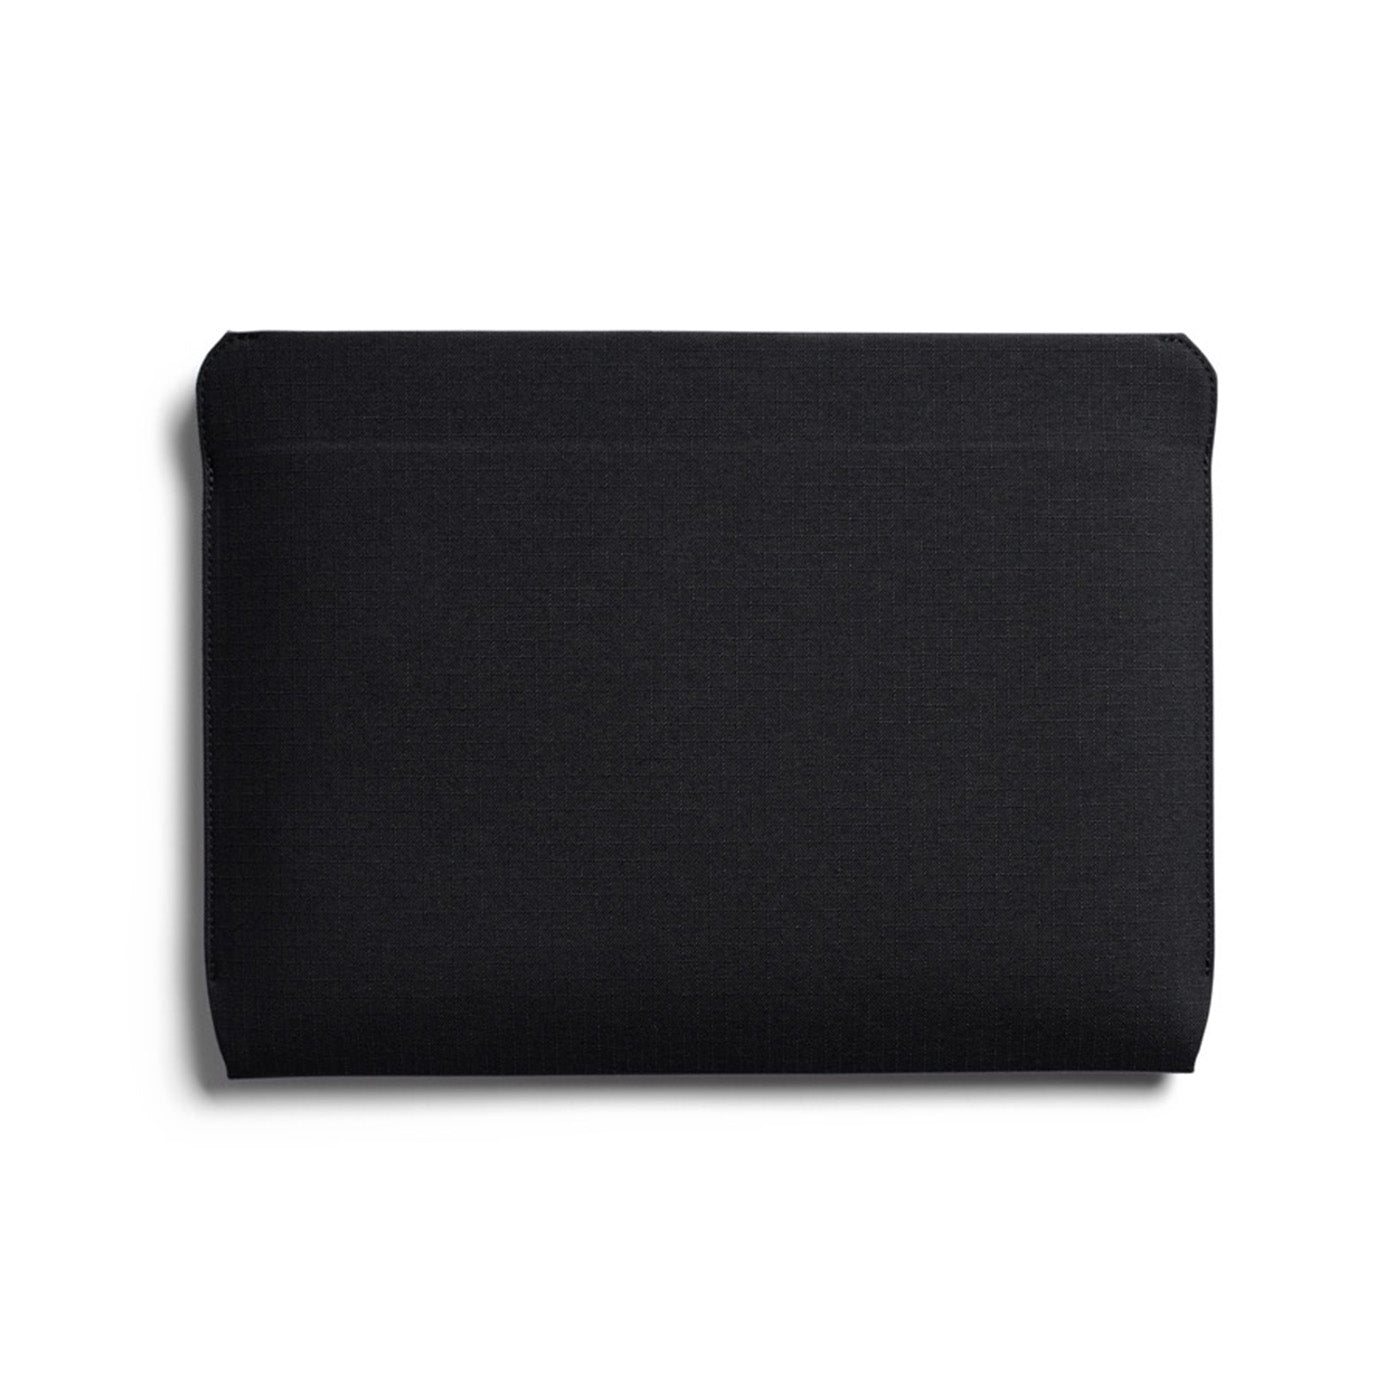 Bellroy Laptop Sleeve 14", Black